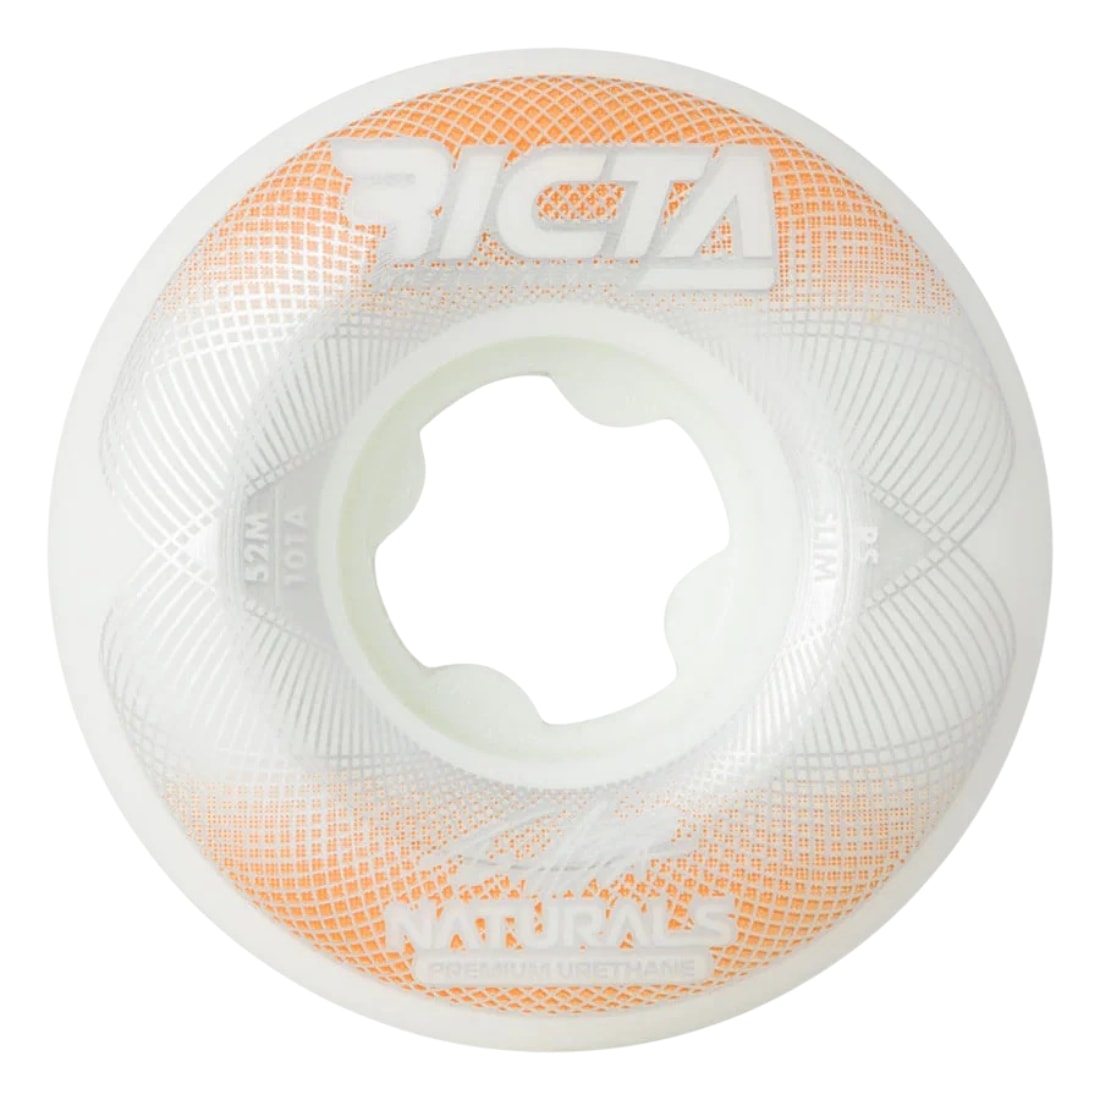 Ricta 52mm Tom Asta Geo Natural Slim 101A Skateboard Wheels - White/Brown - Skateboard Wheels by Ricta 52mm